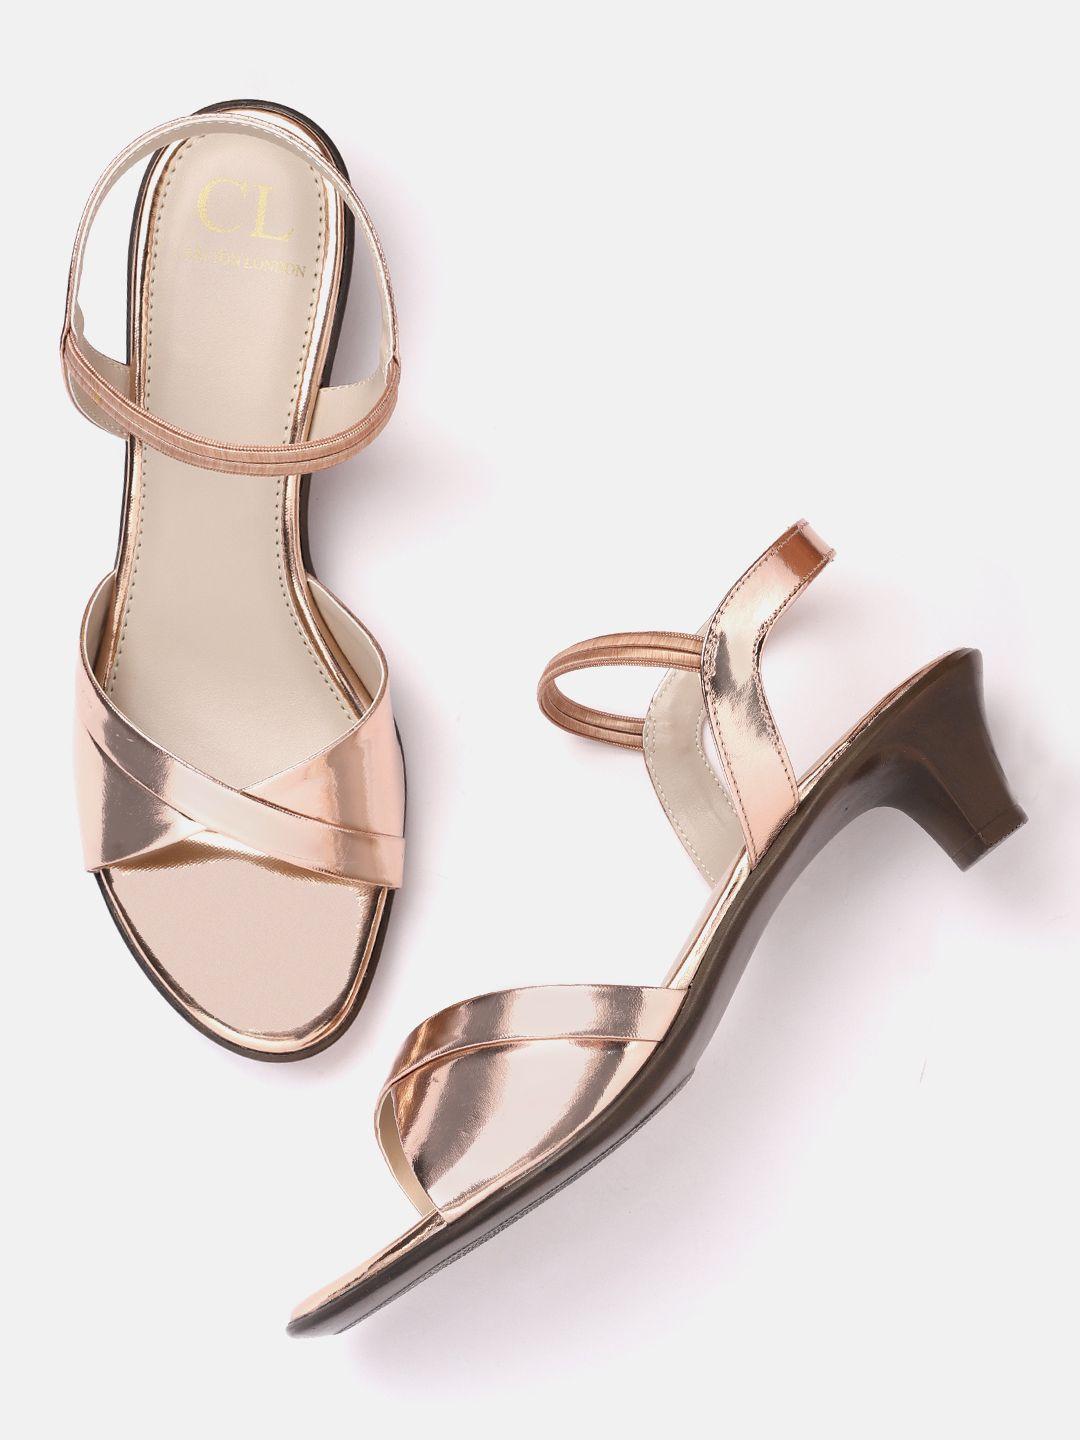 carlton london women rose gold-toned patent finish block heels